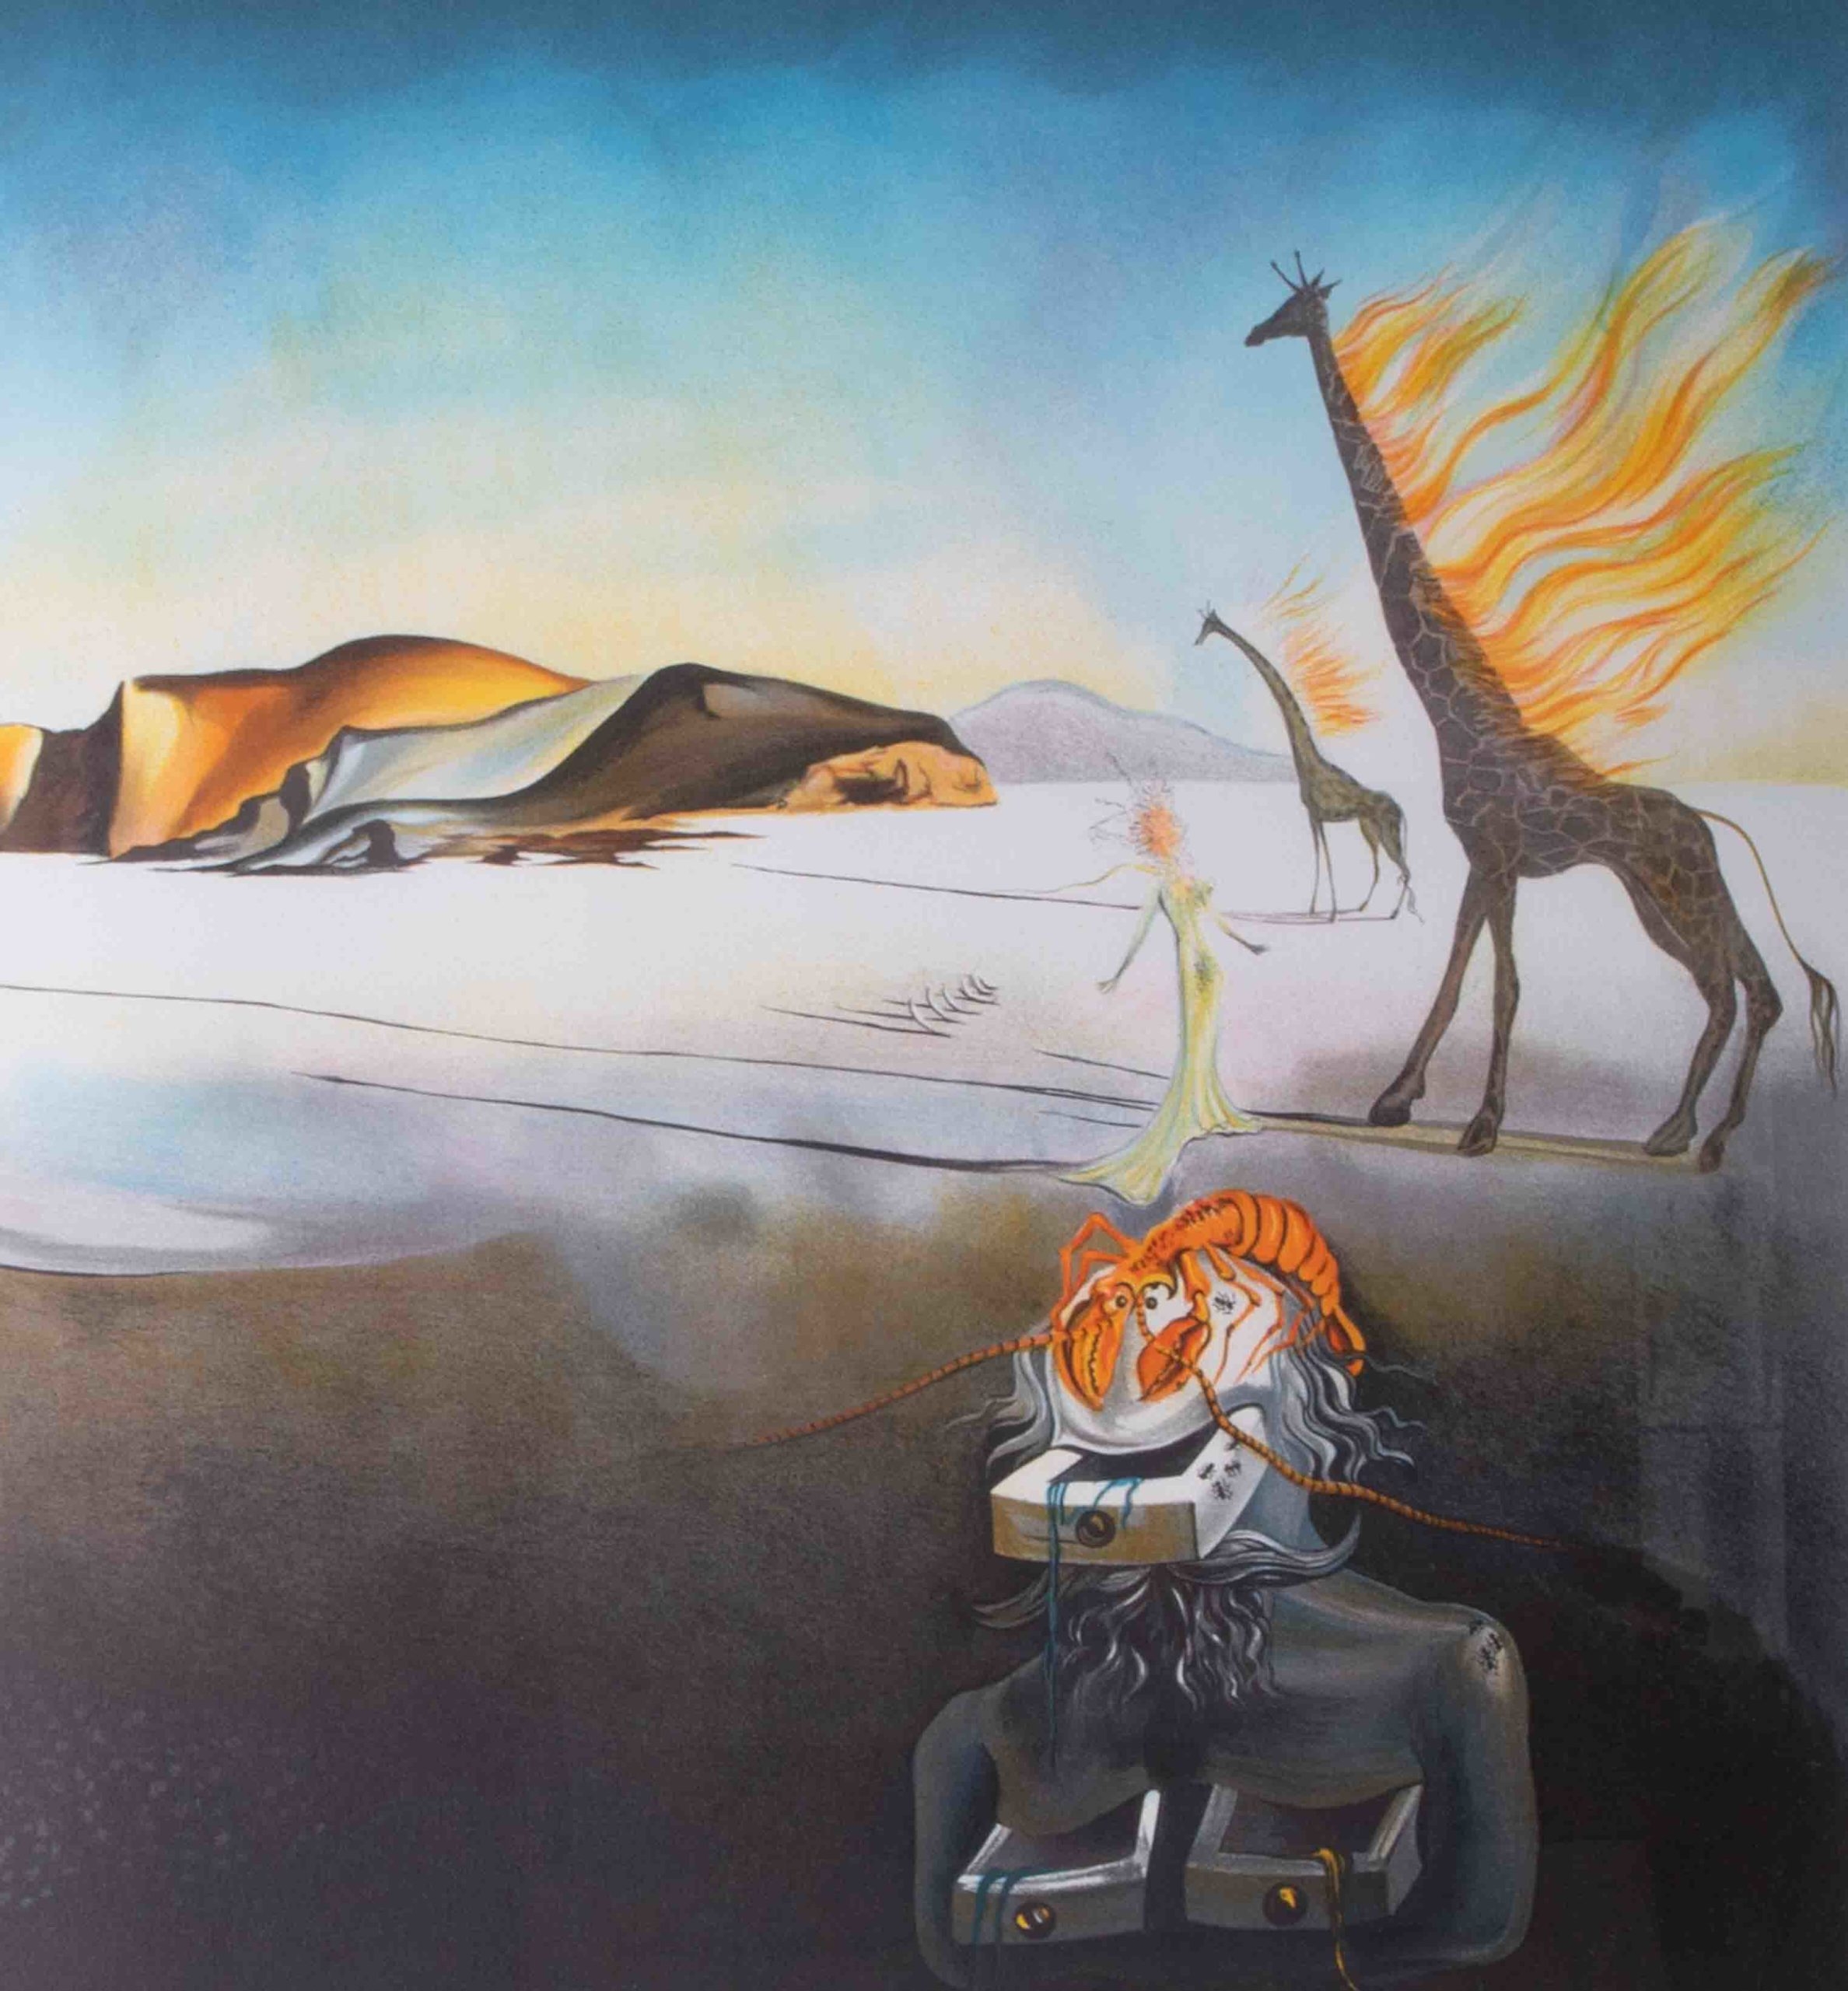 The Burning Giraffe by Salvador Dalí